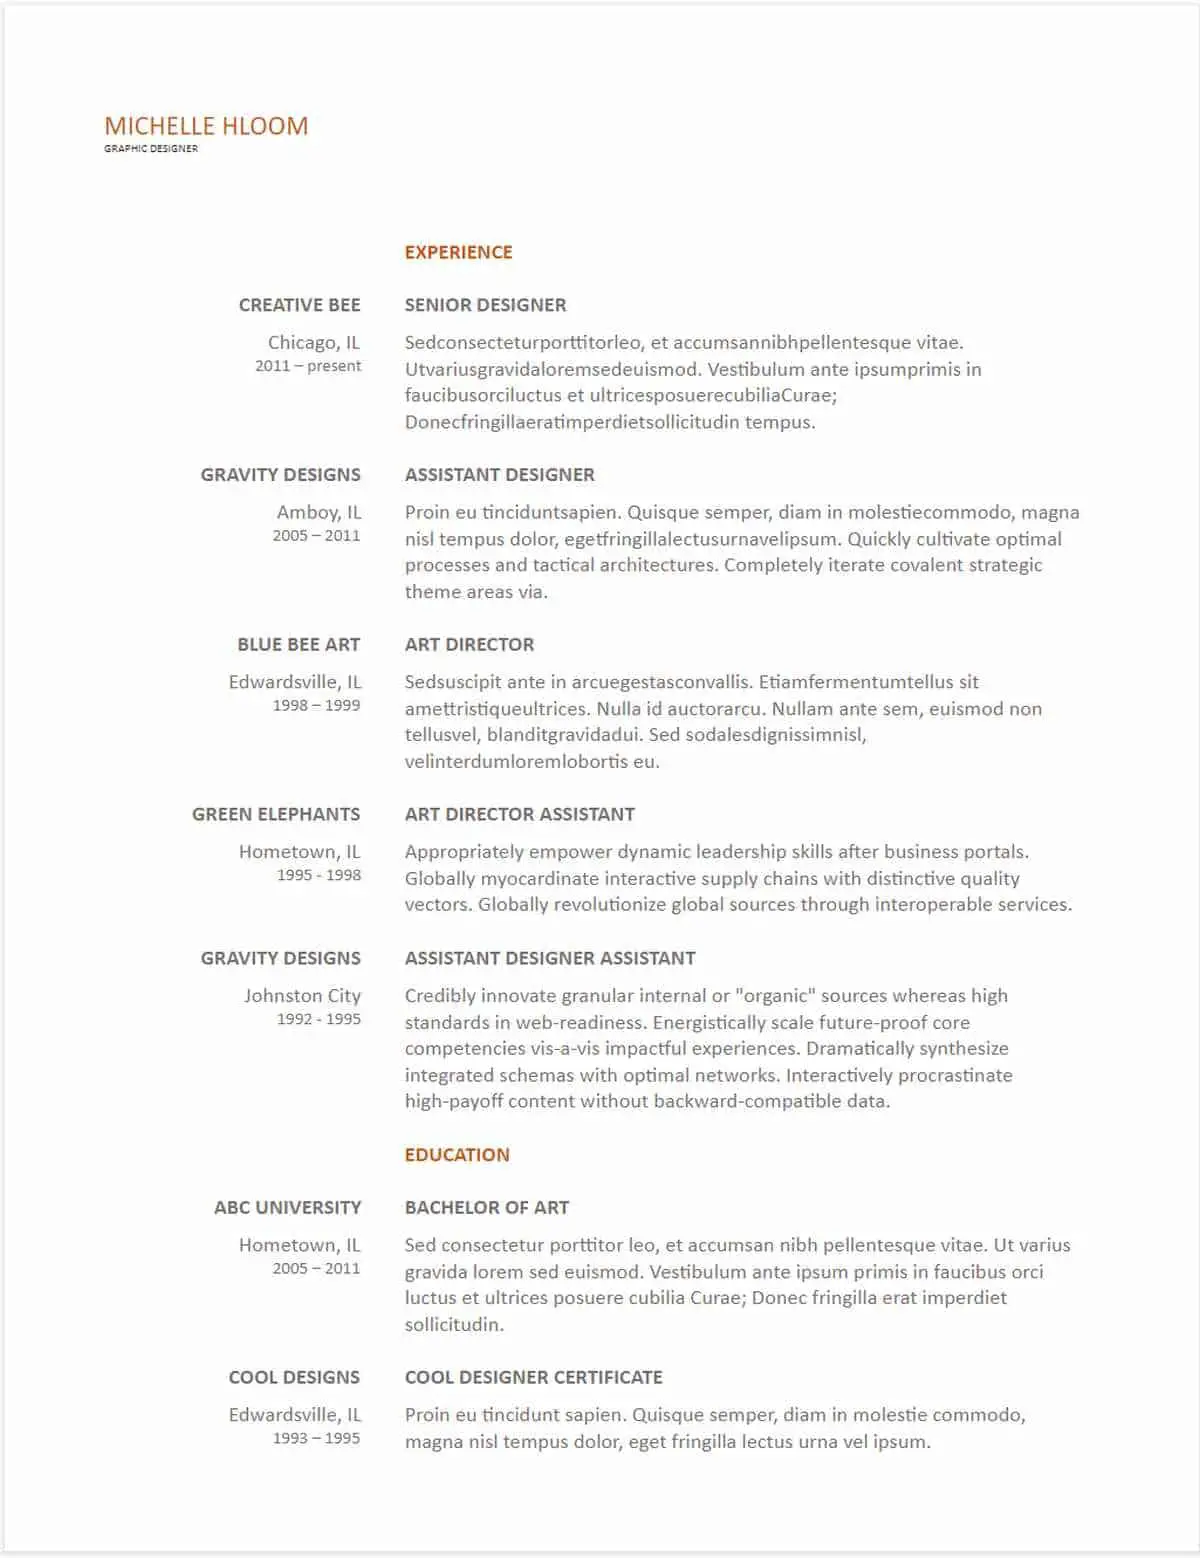 free resume templates 2020 google docs